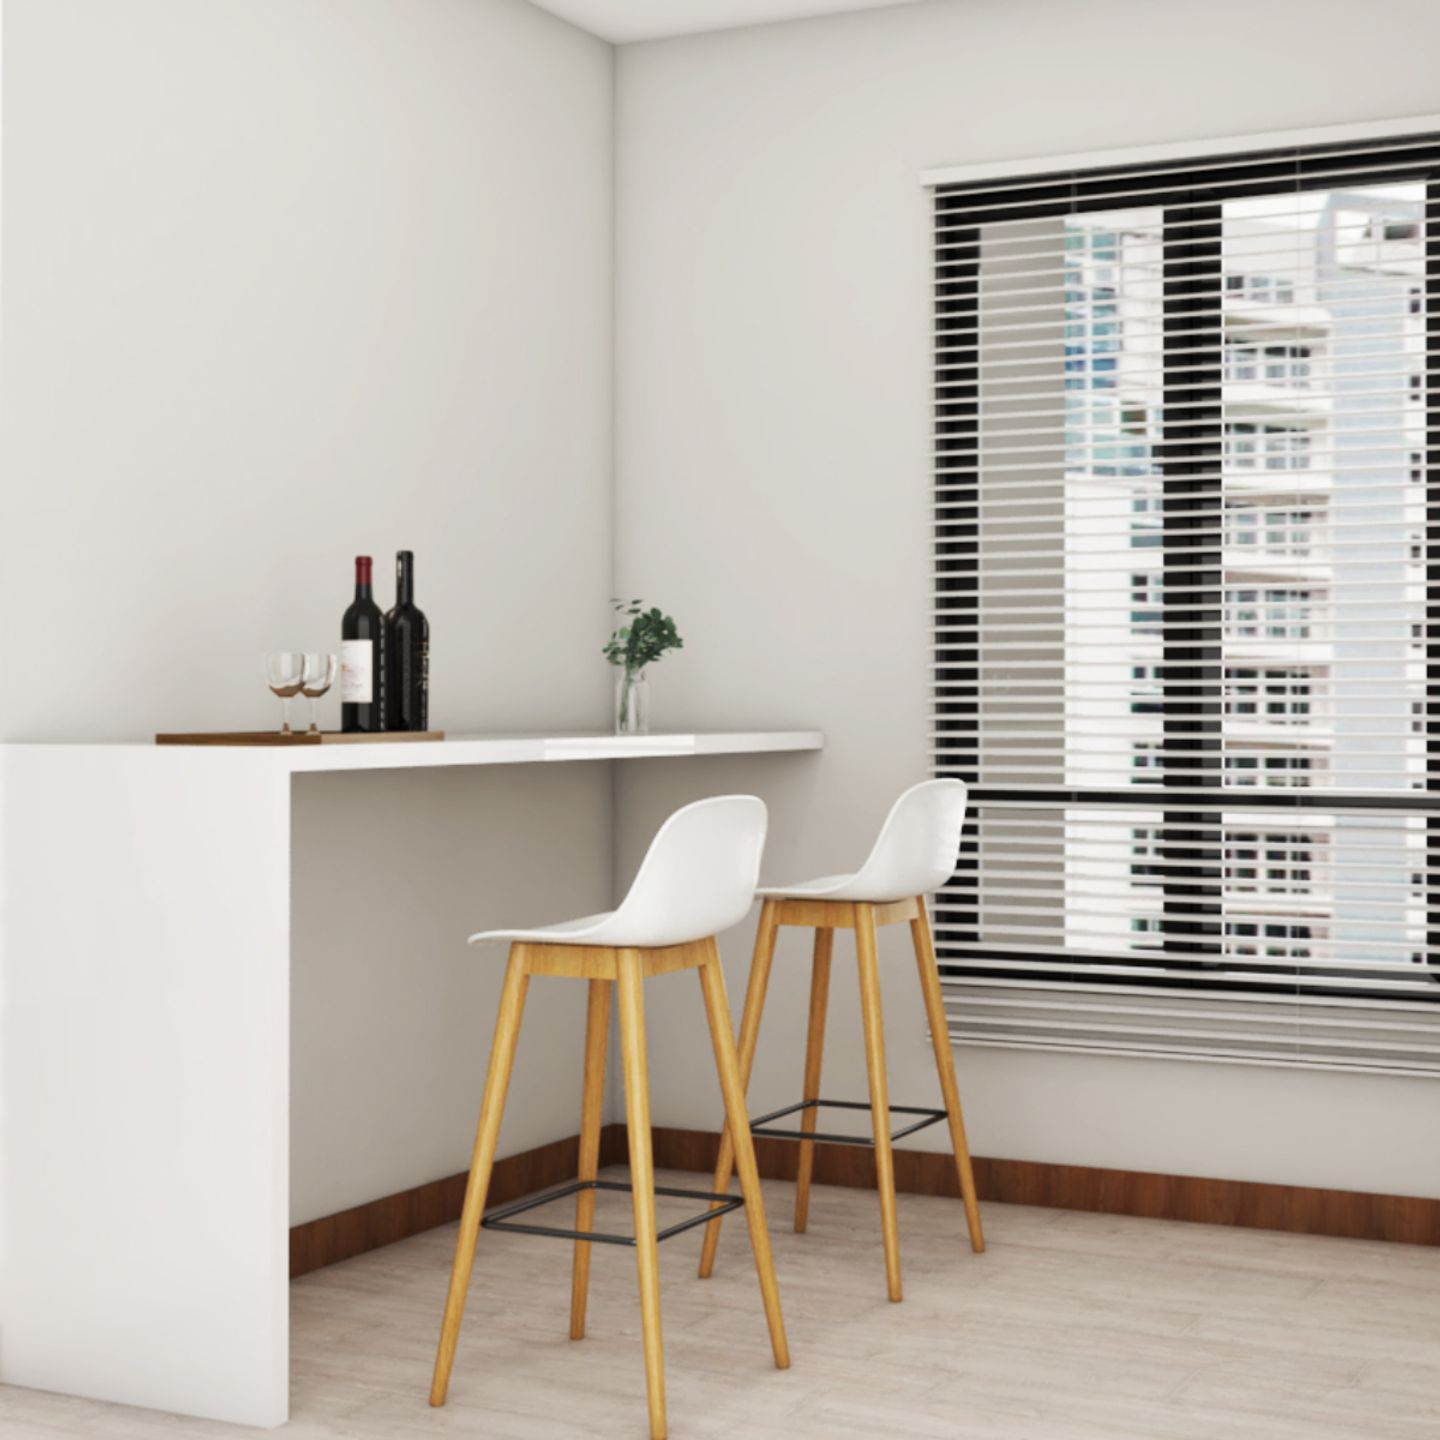 Contemporary Interior Design With A 2-Seater Breakfast Counter - Livspace